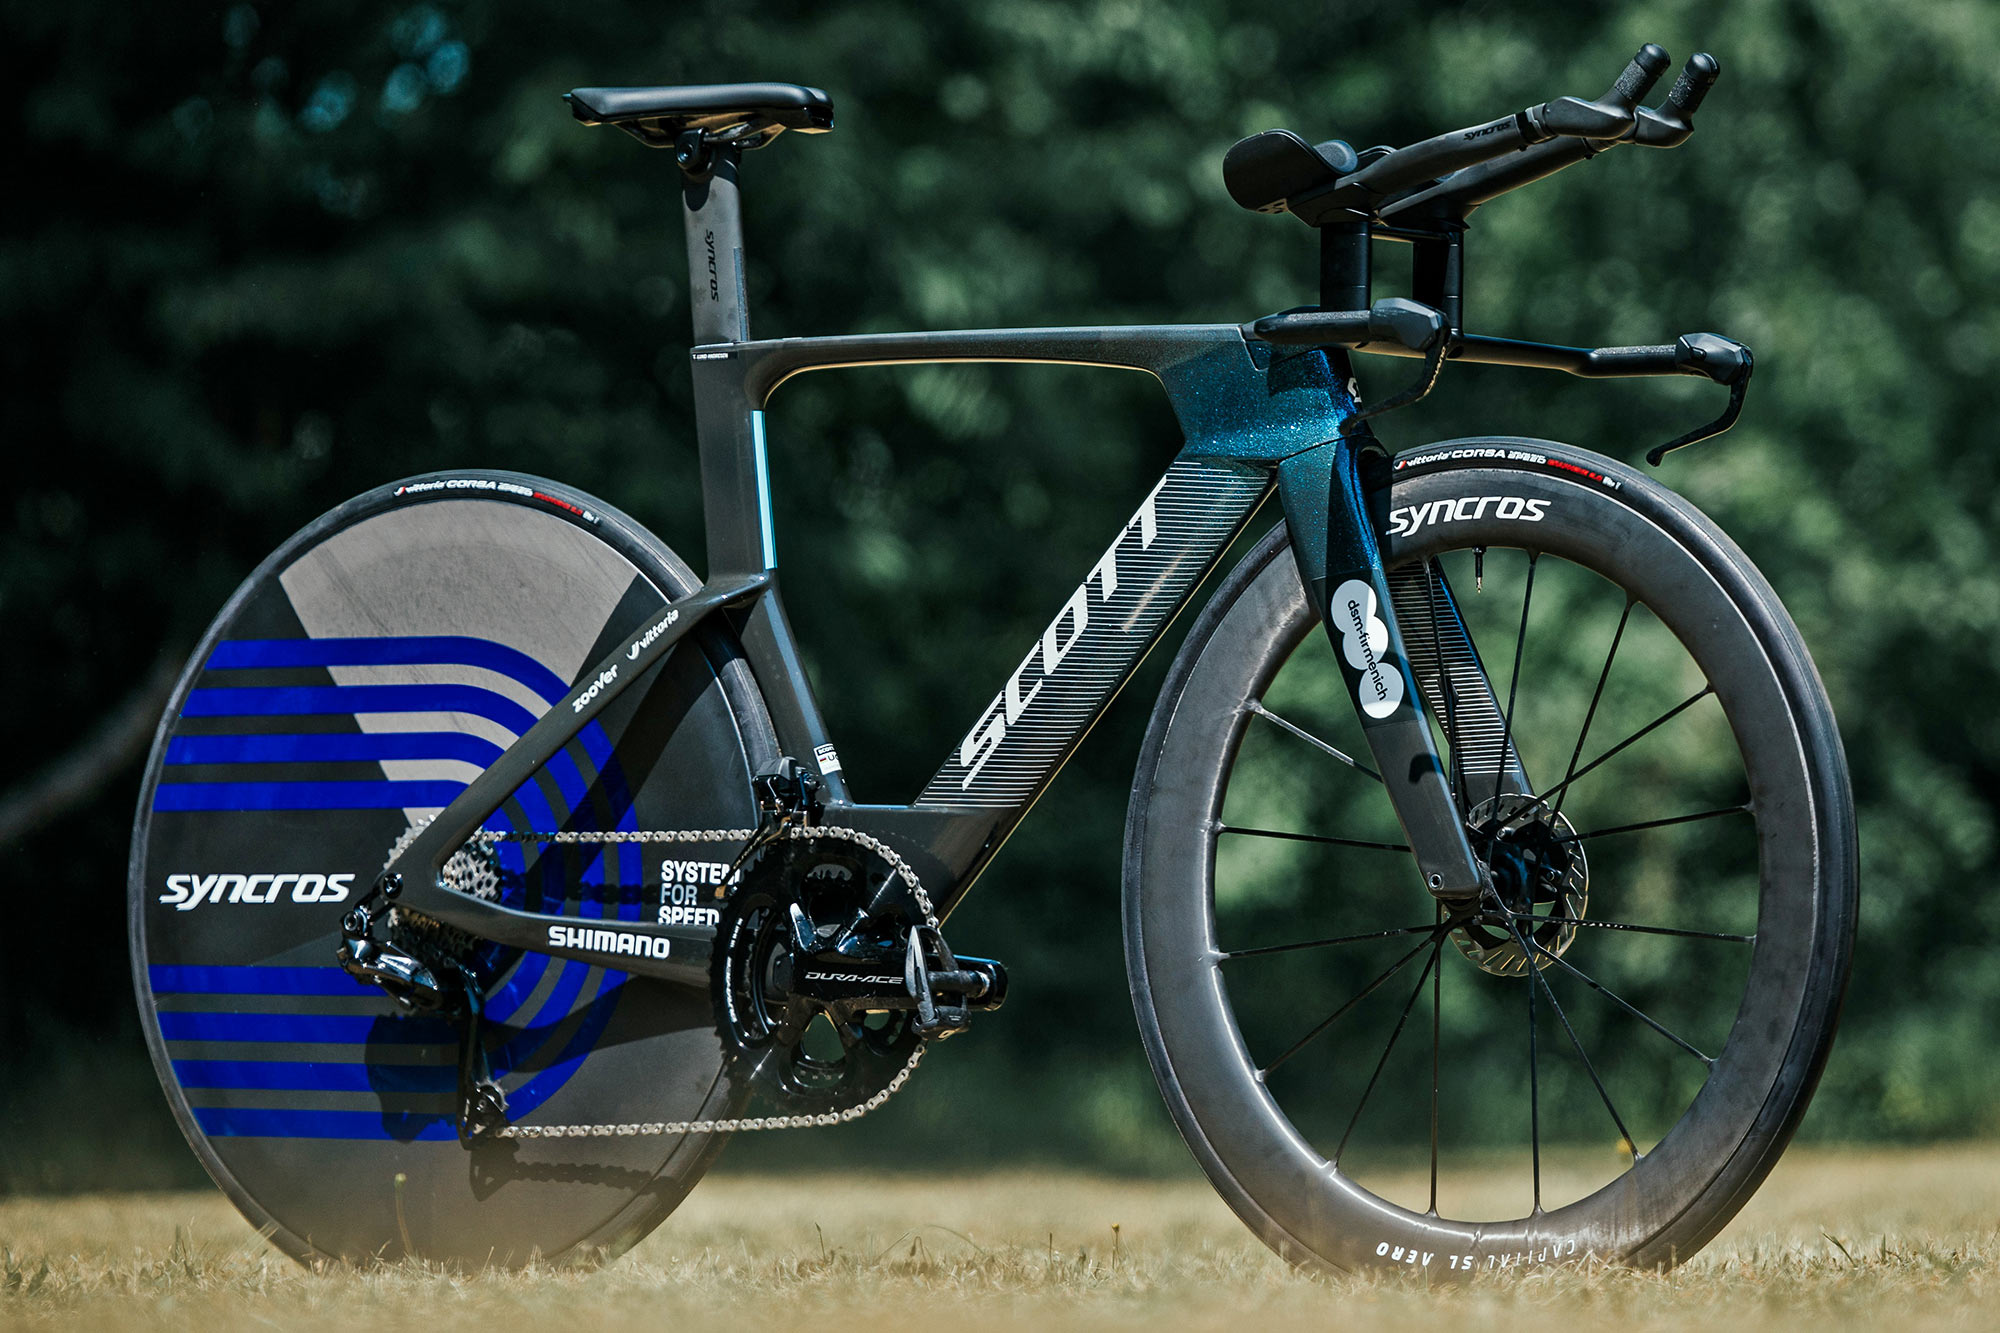 Syncros Capital SL TT Disc, full-carbon monocoque road time trial wheels for DSM, photo by El Toro Media, angled TT bike